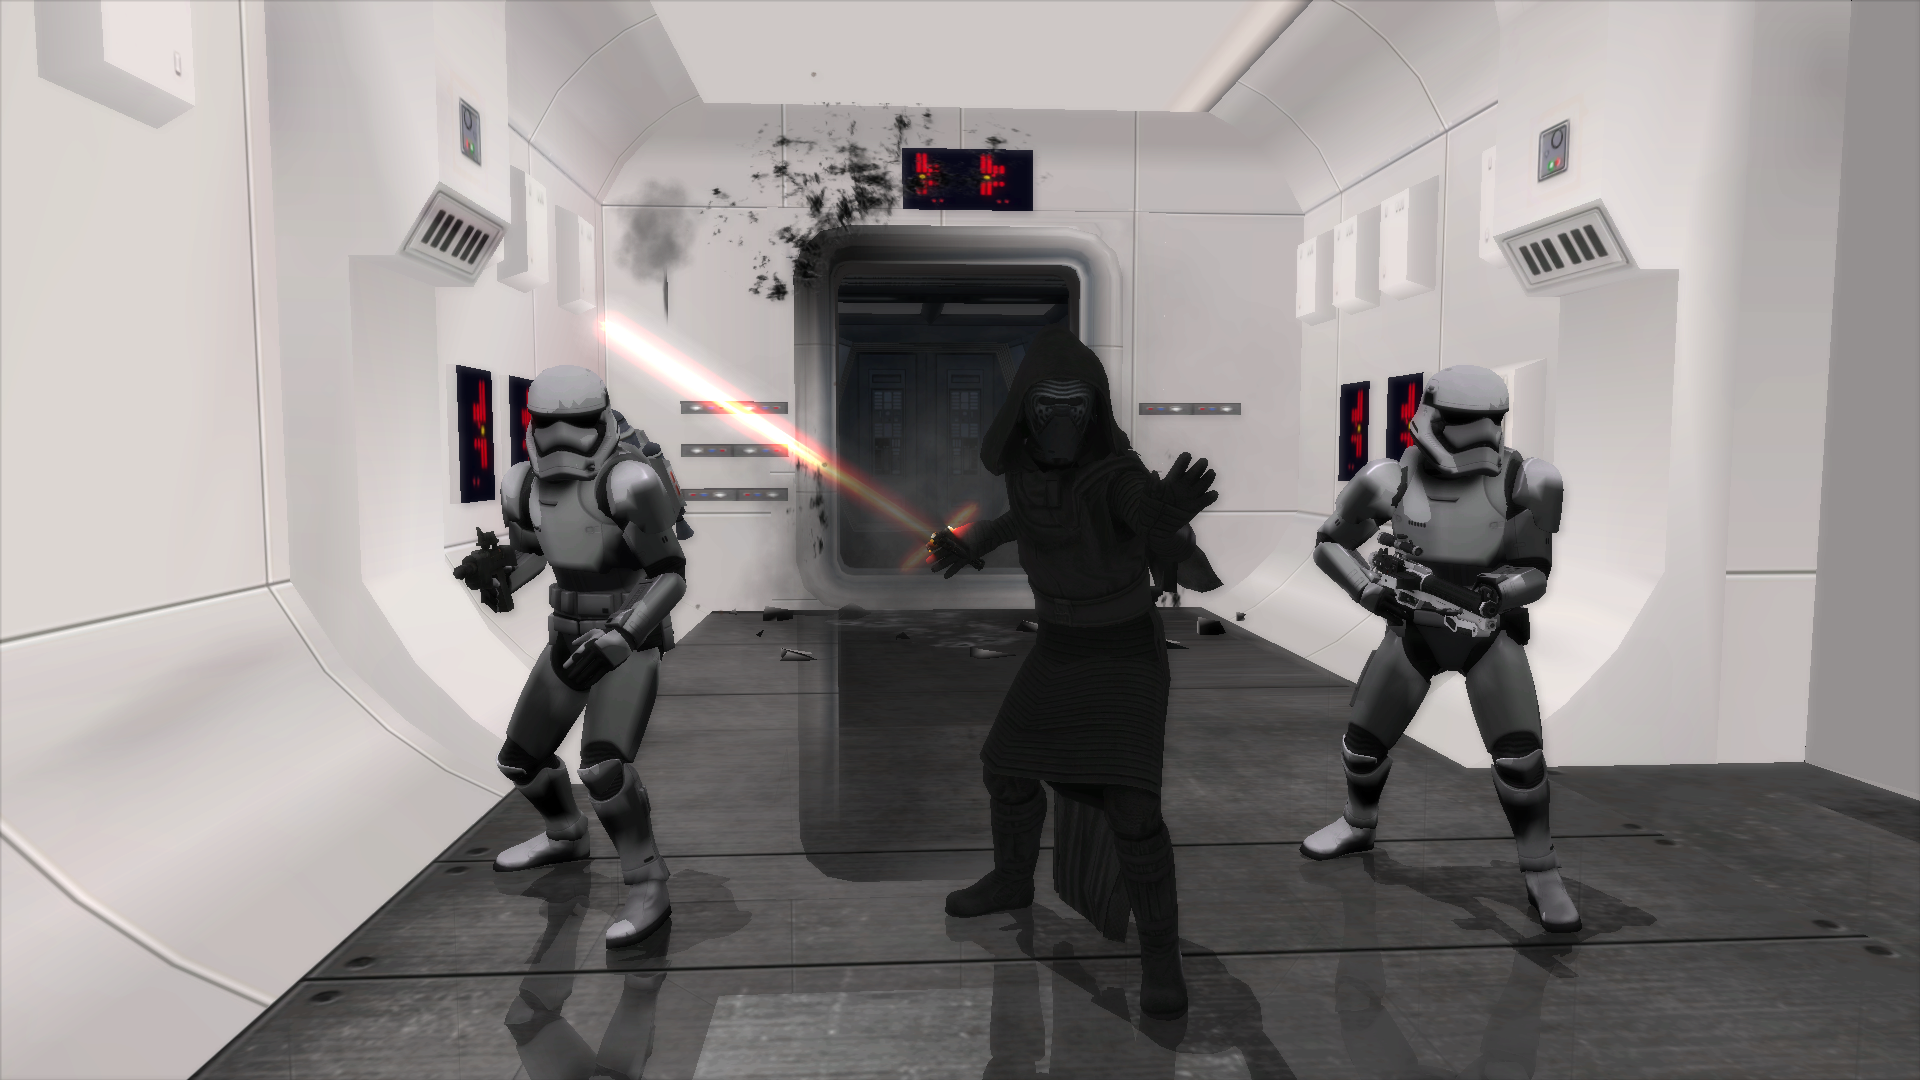 Star Wars Battlefront 2 Mod, Star Wars: A New Frontier 1.0